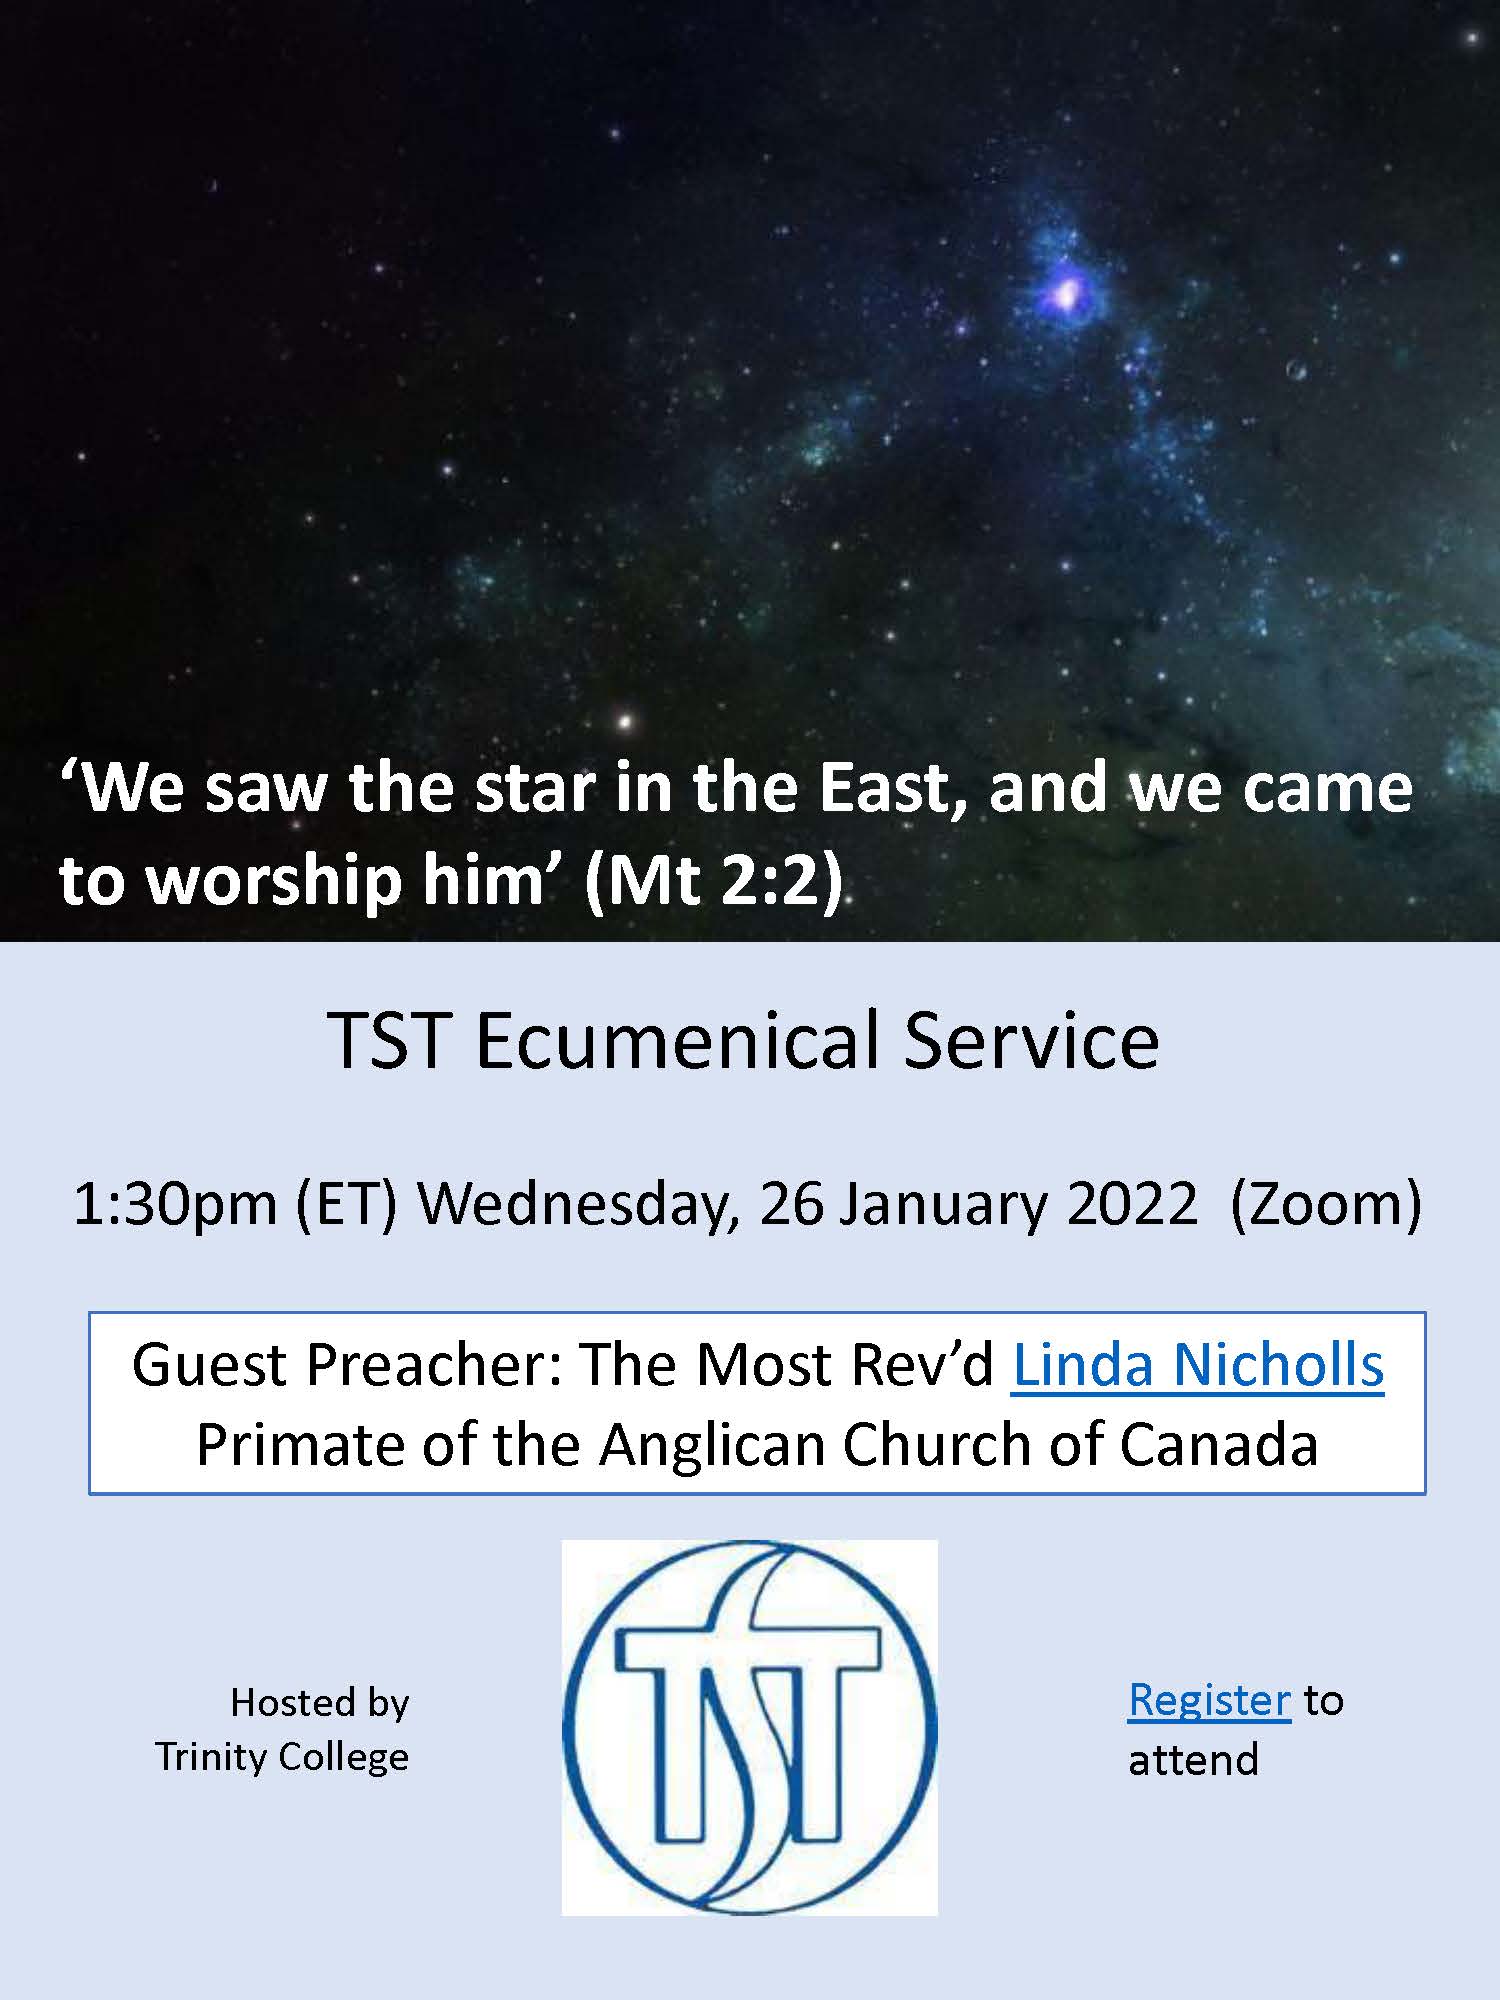 Annual TST-wide Ecumenical Worship Service